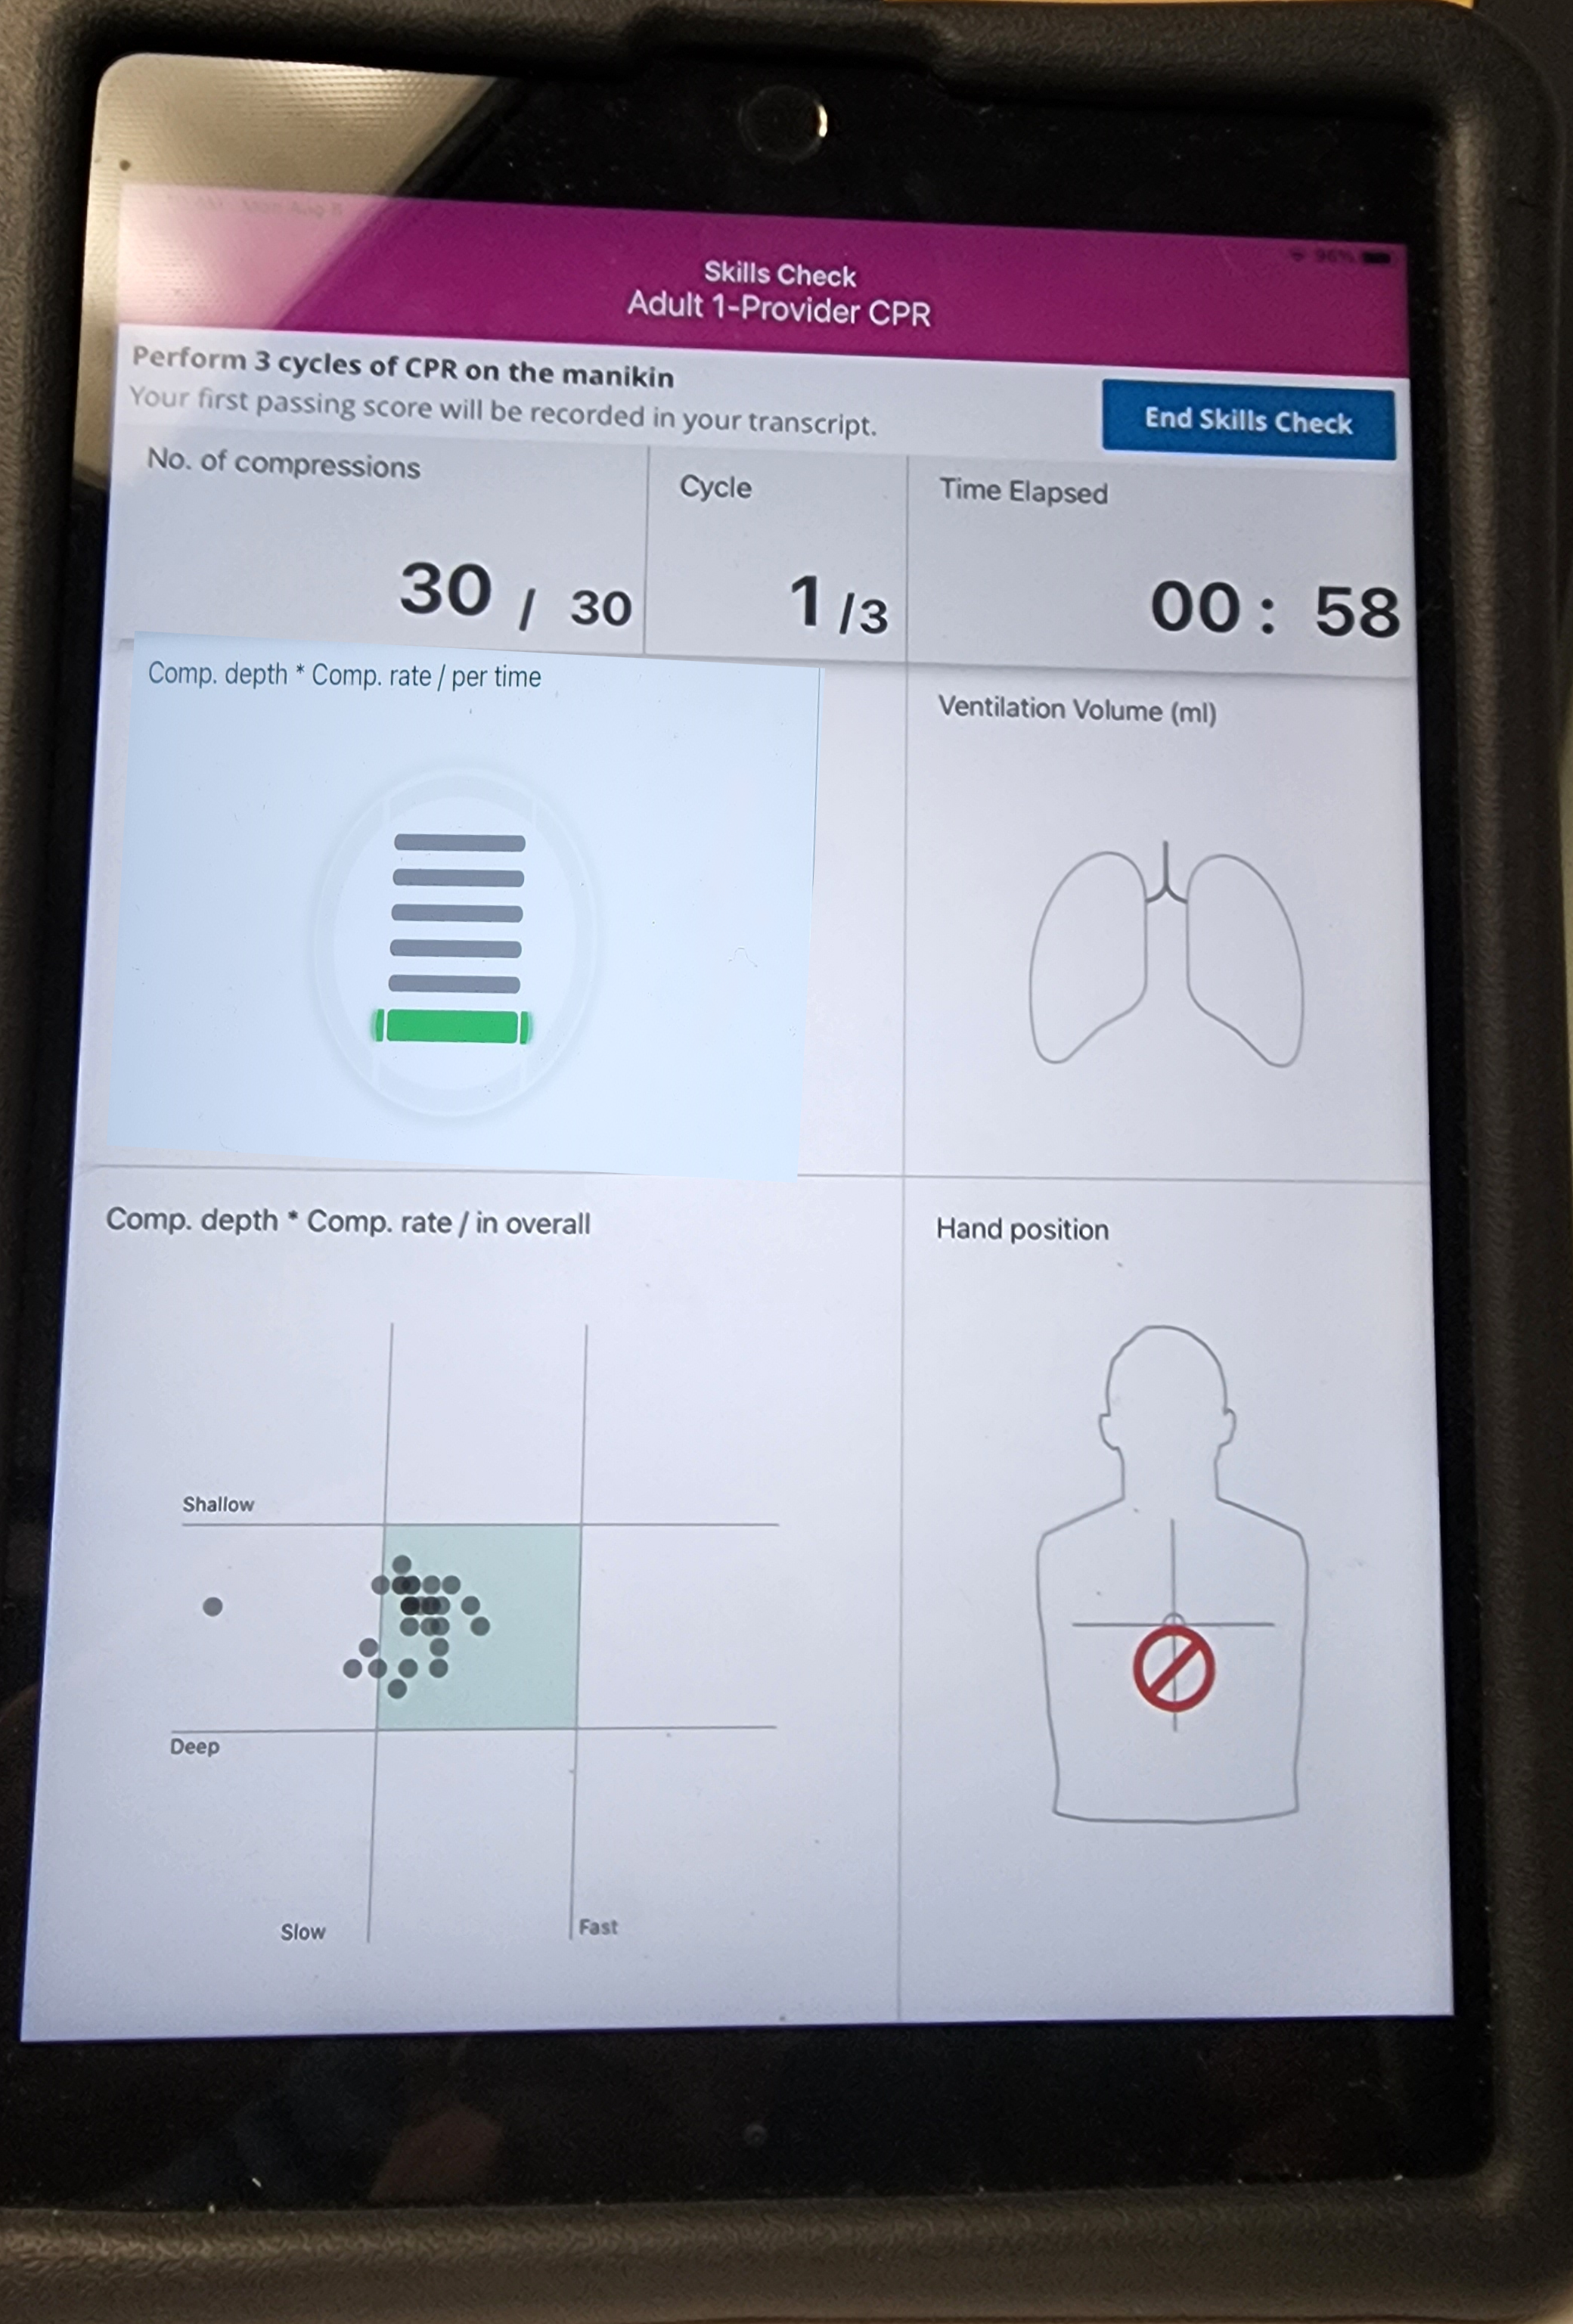 iPad image of resuscitation skills